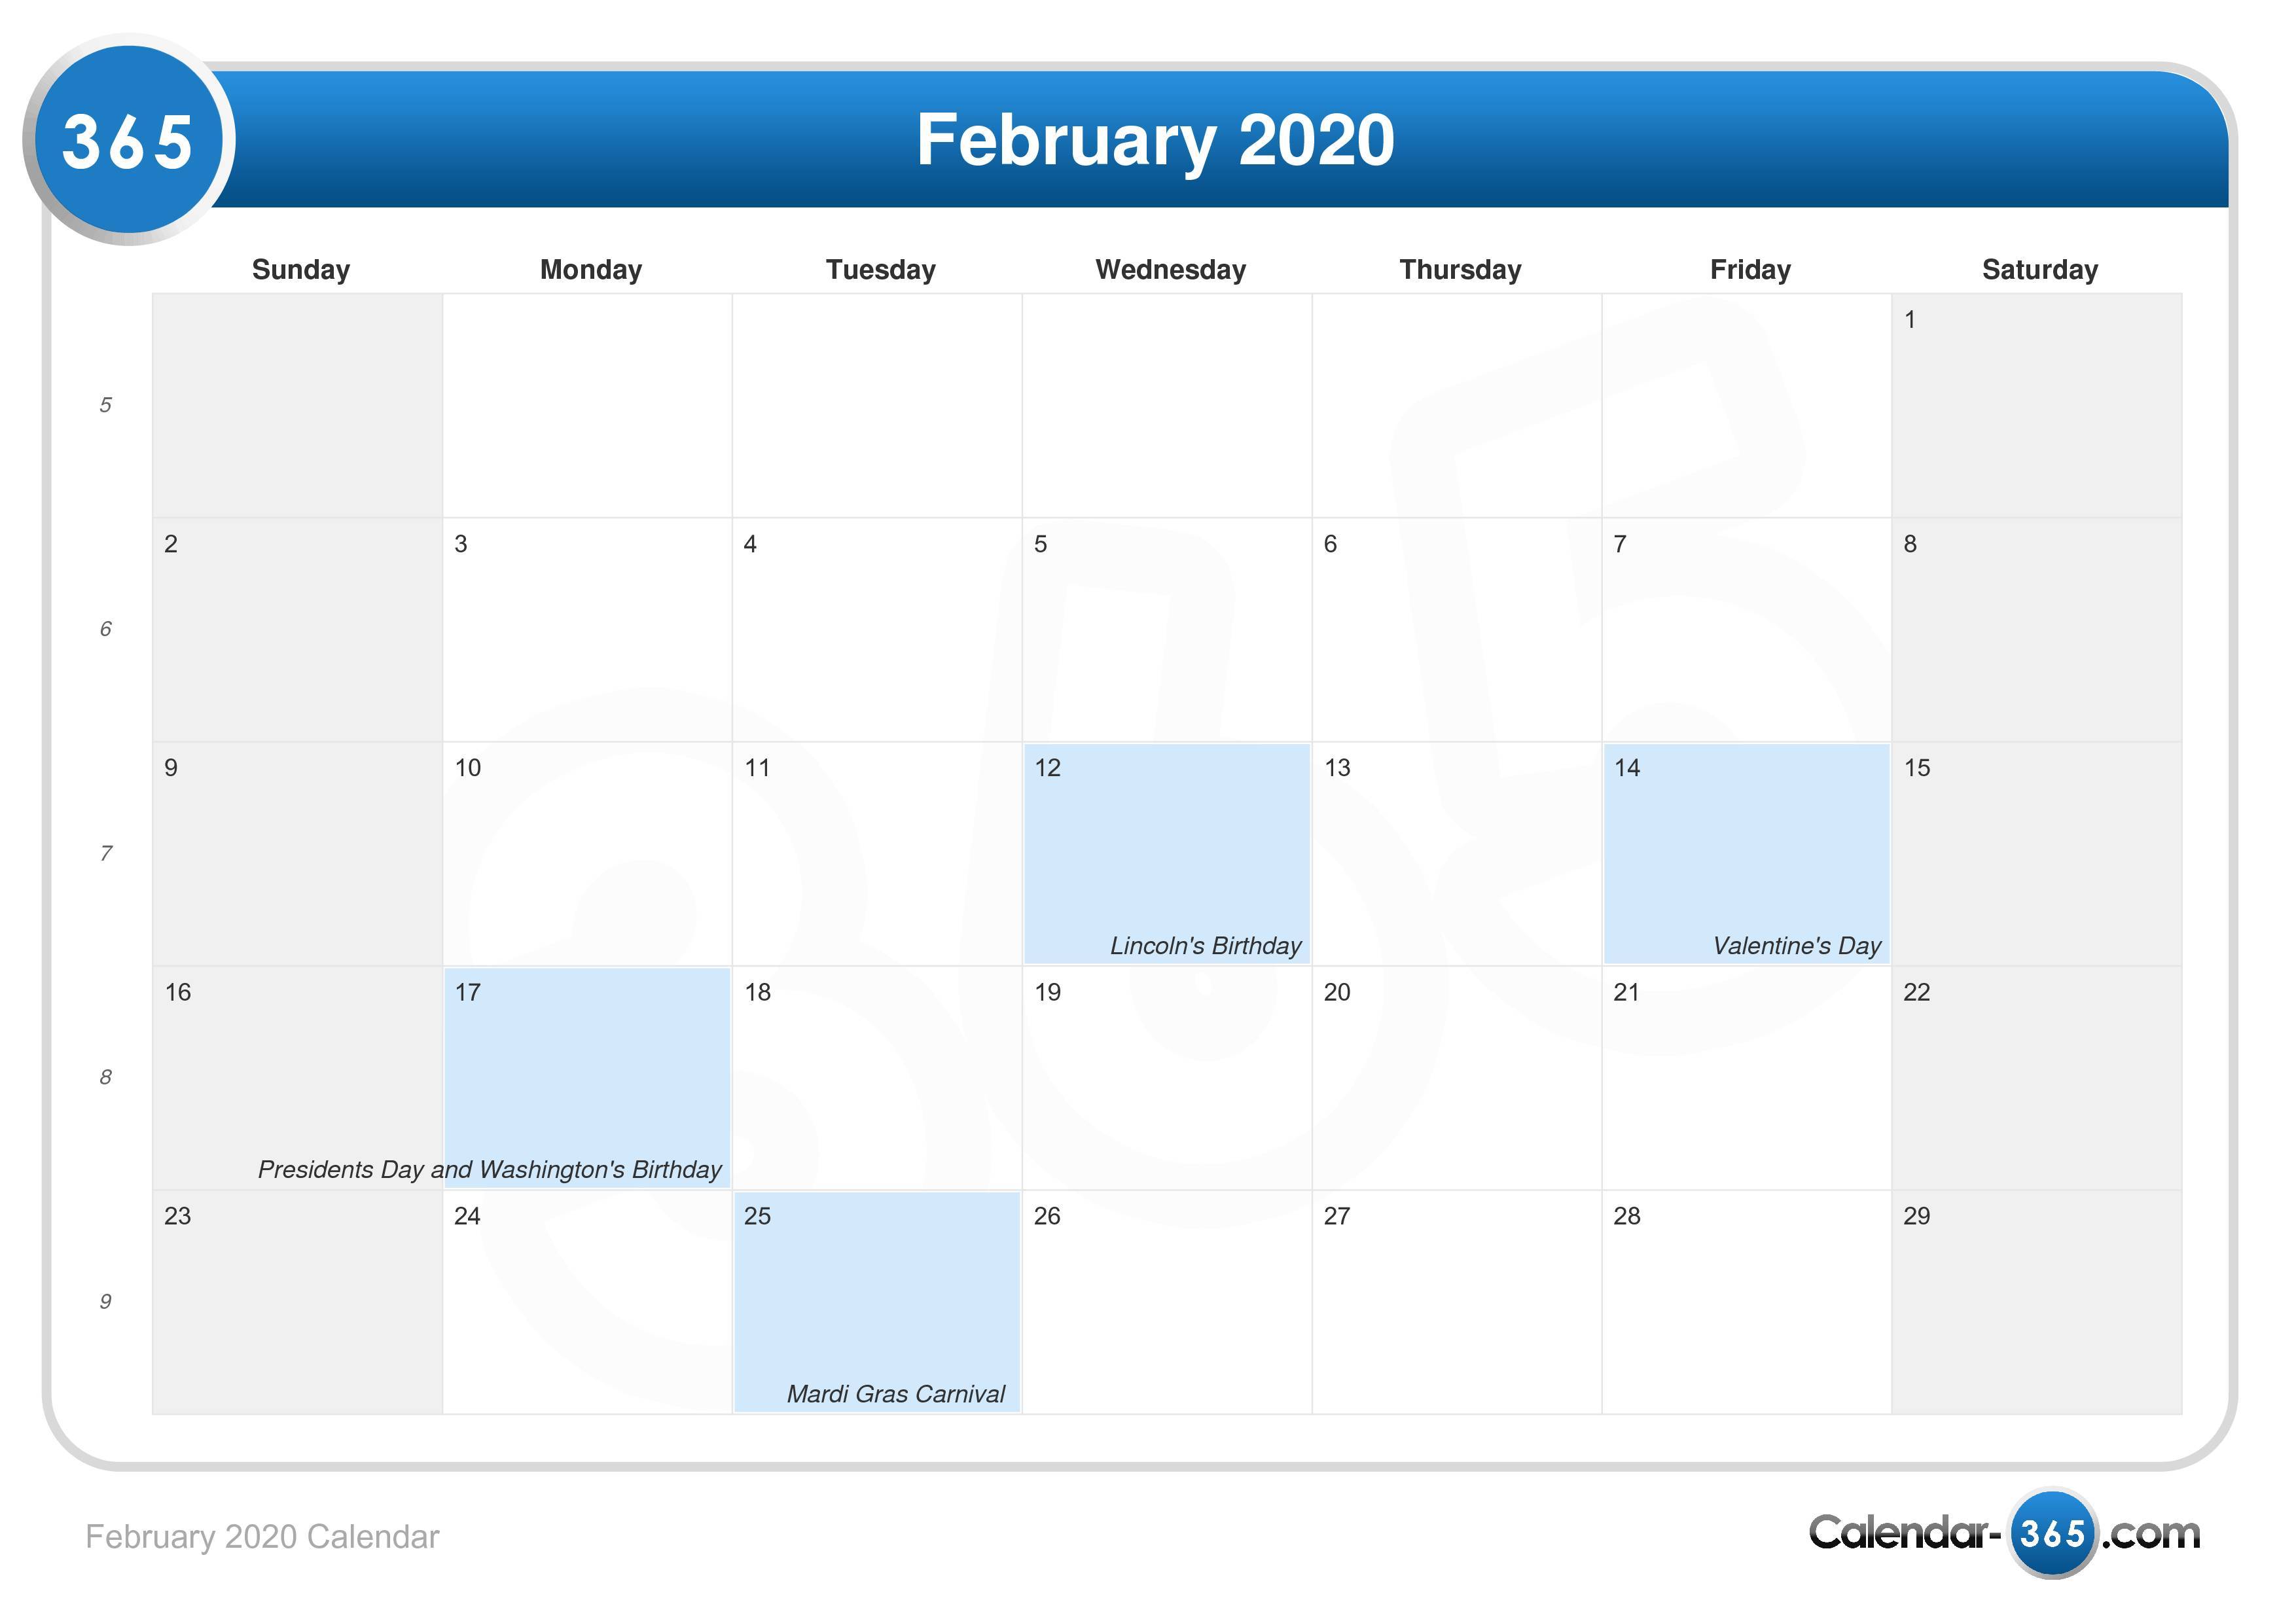 February 2020 Calendar